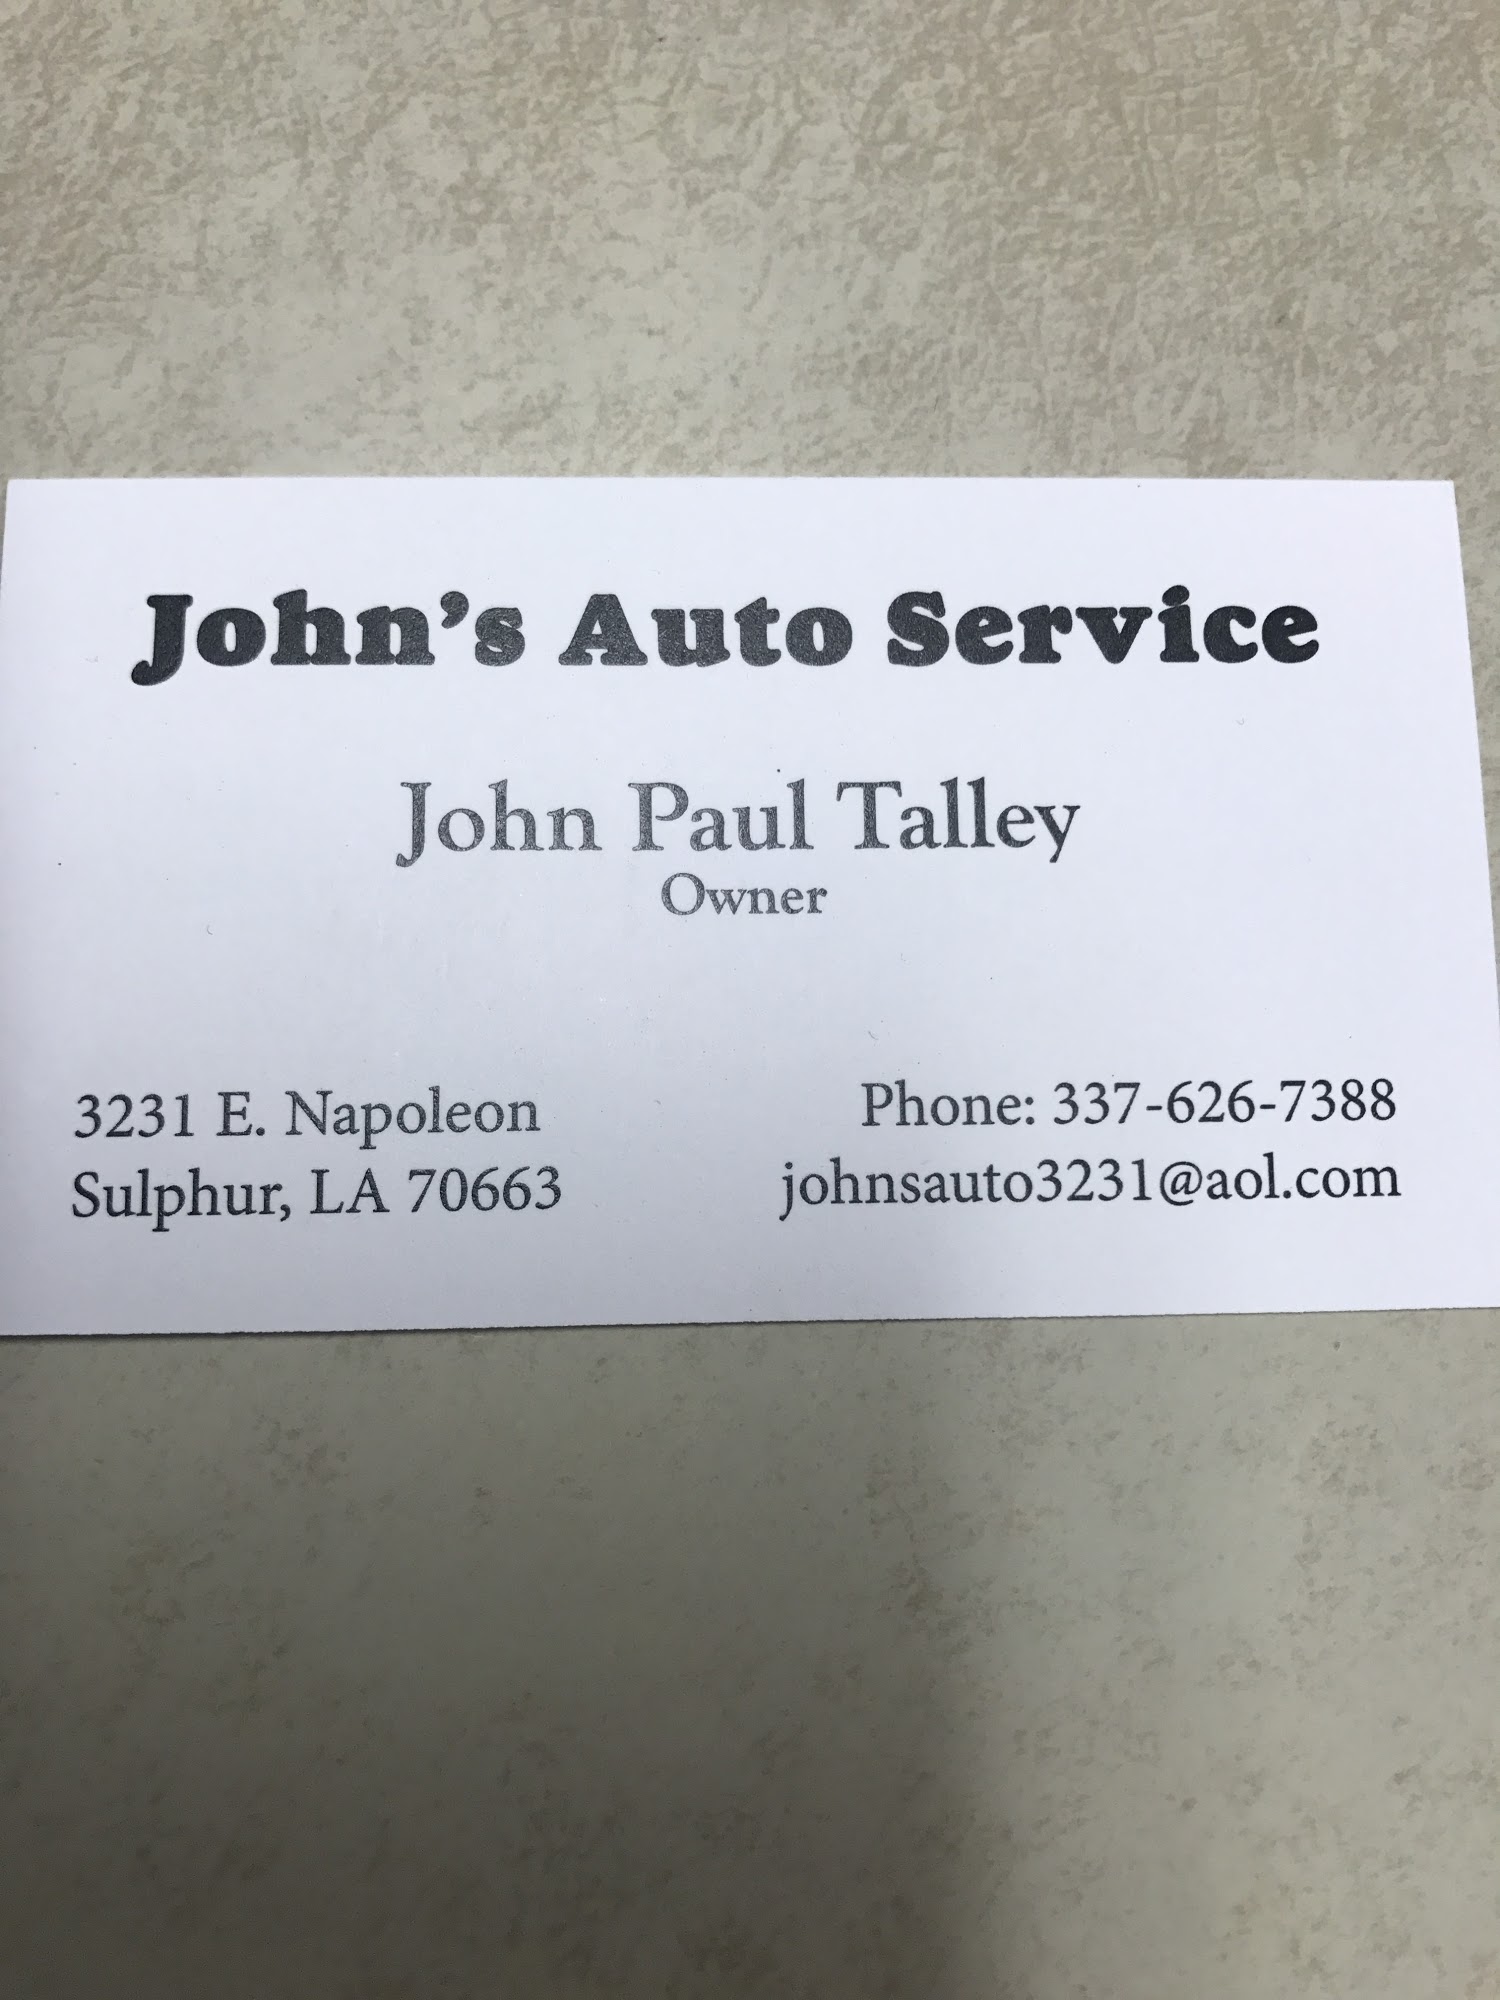 Johns Auto Service